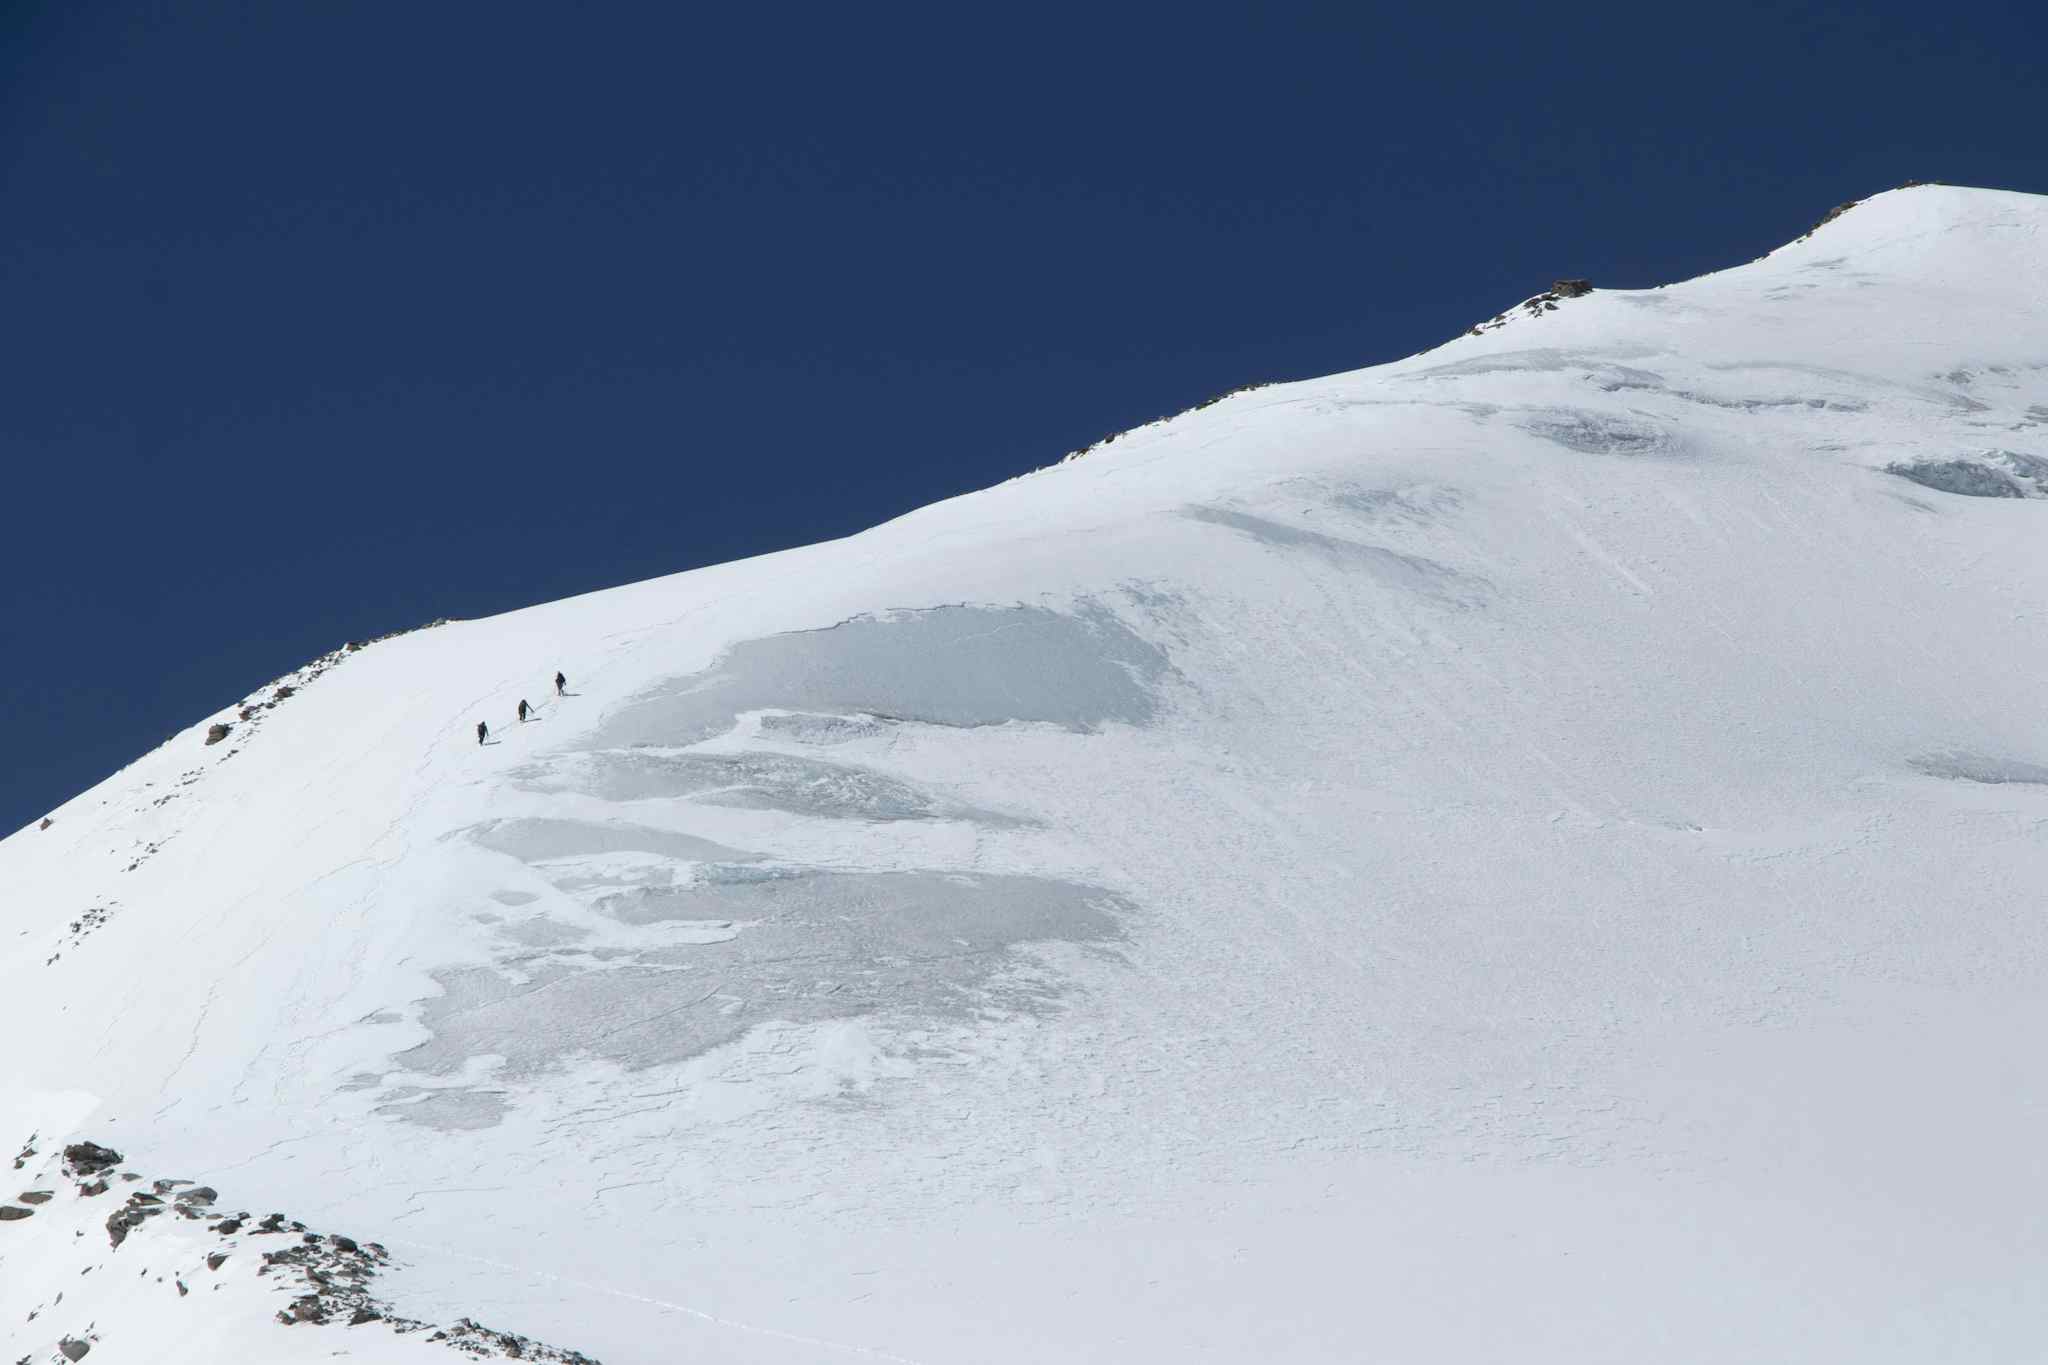 Three climbers ascending a snowy ridge to UT Kangri's peak, India